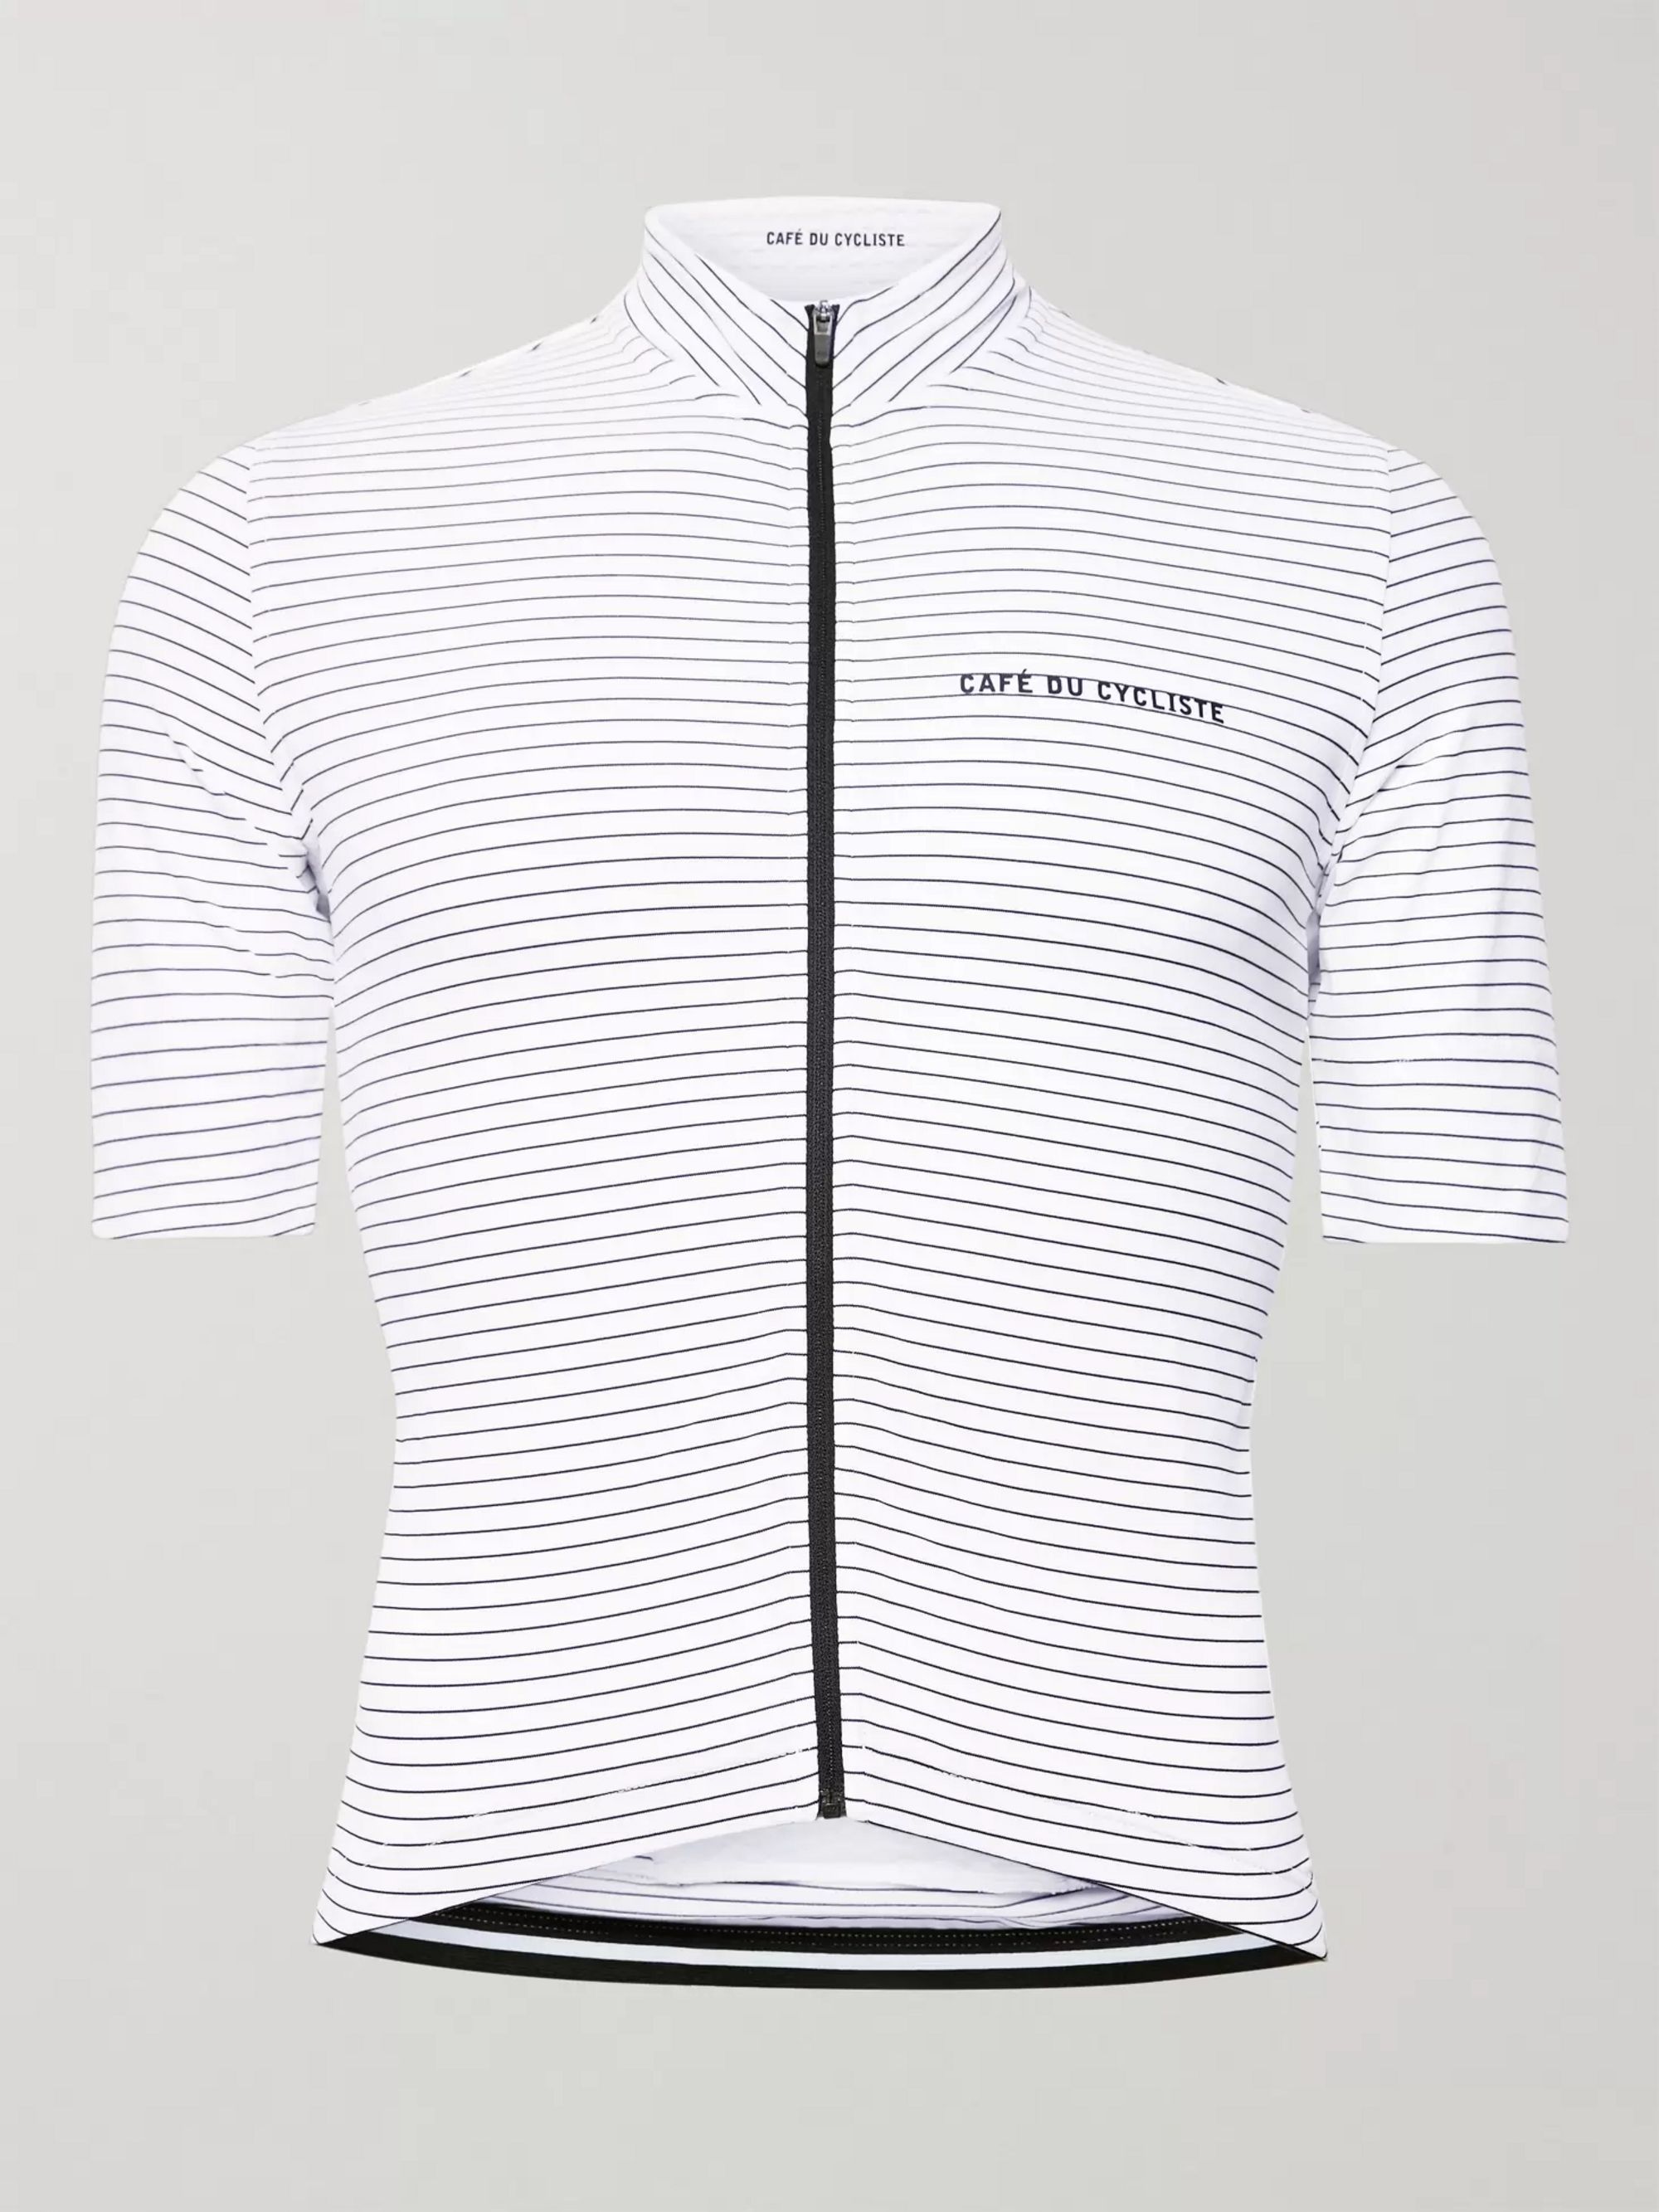 striped cycling jersey